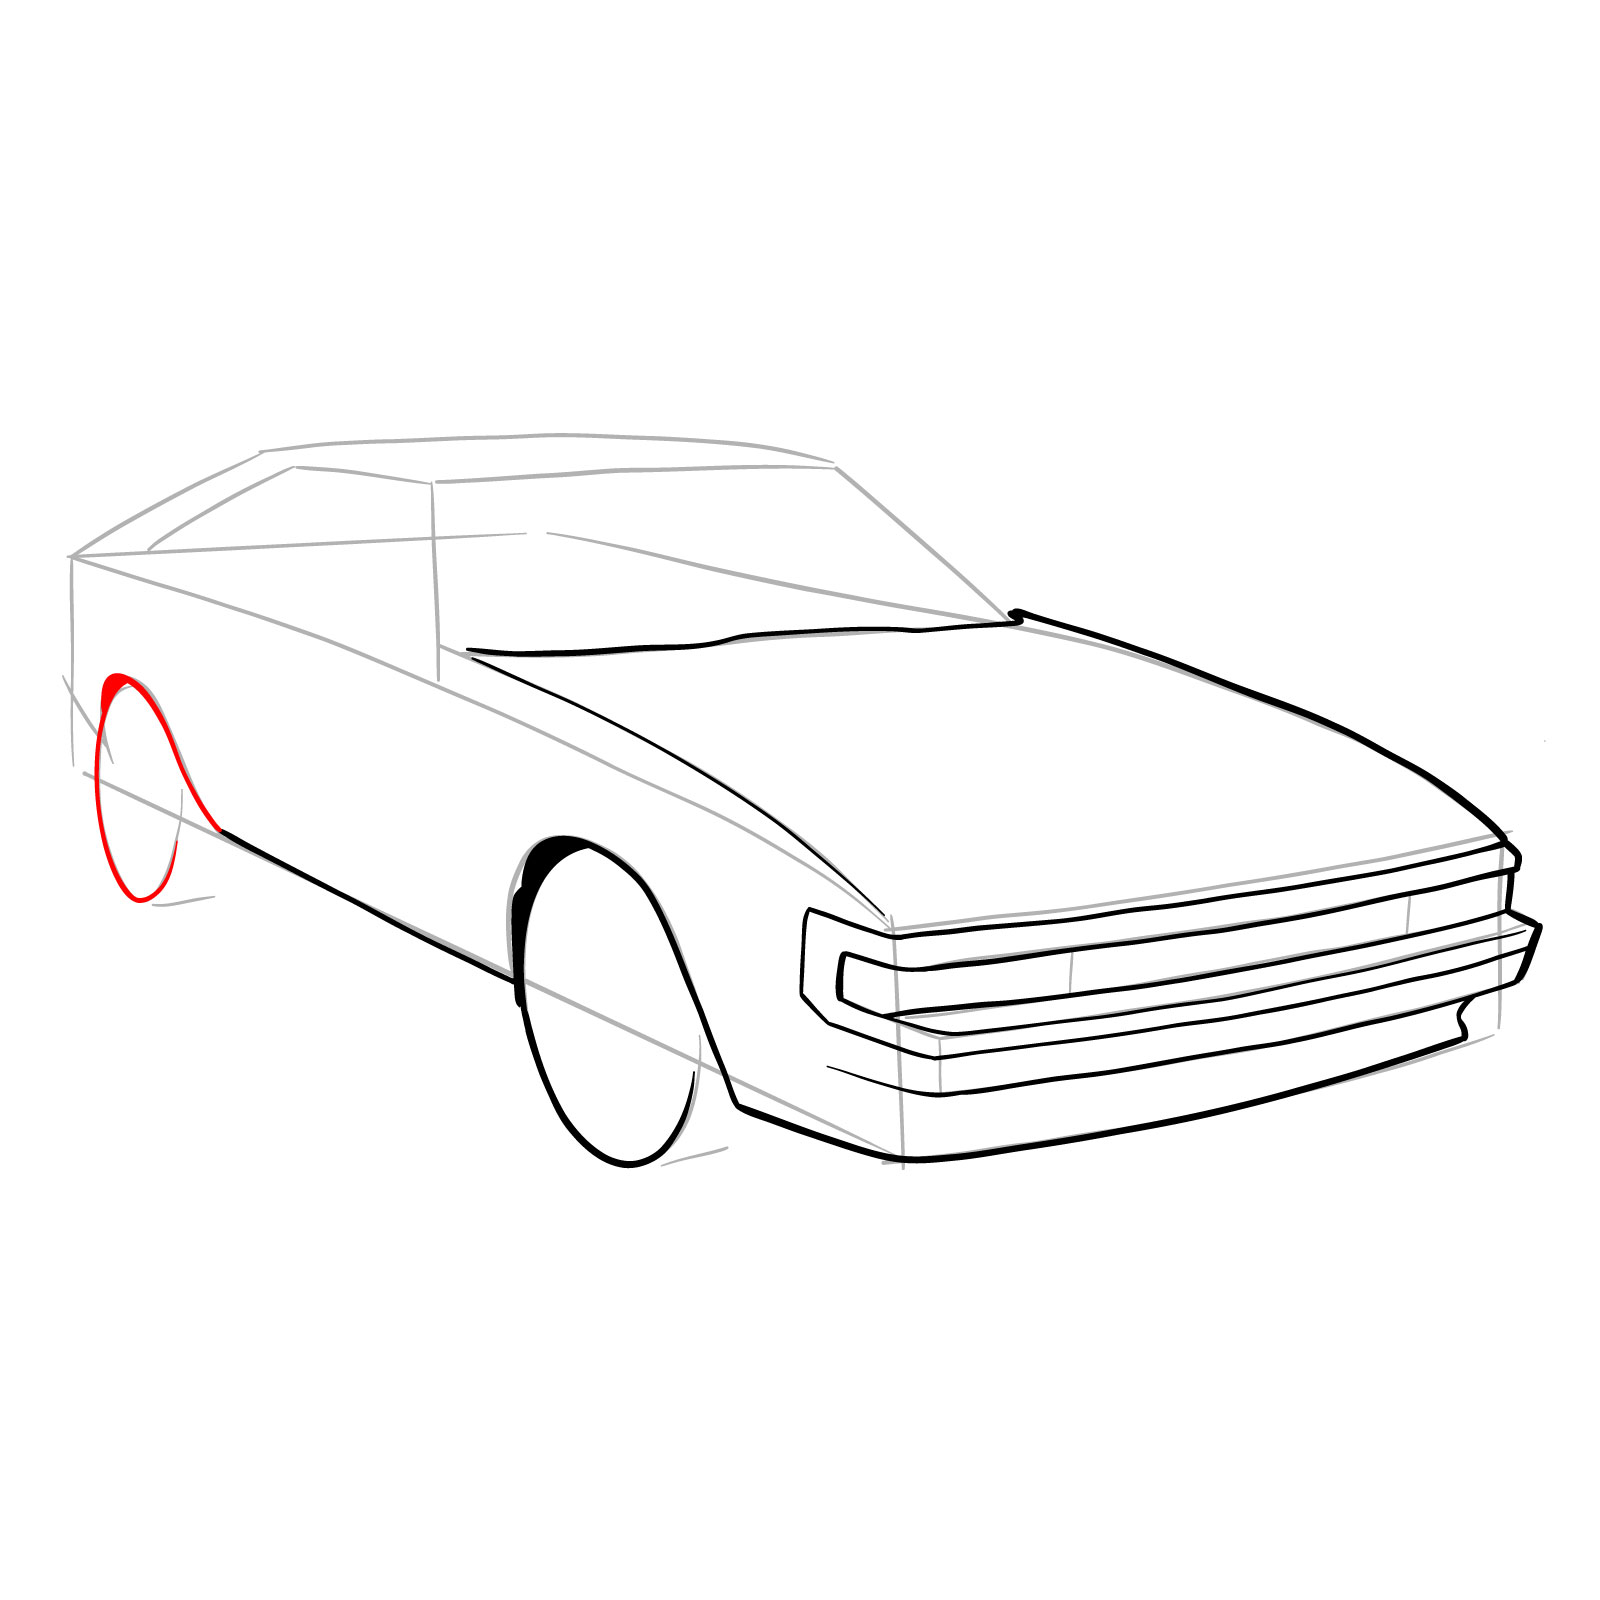 How to draw a 1985 Toyota Celica Supra P Type MK 2 - step 13